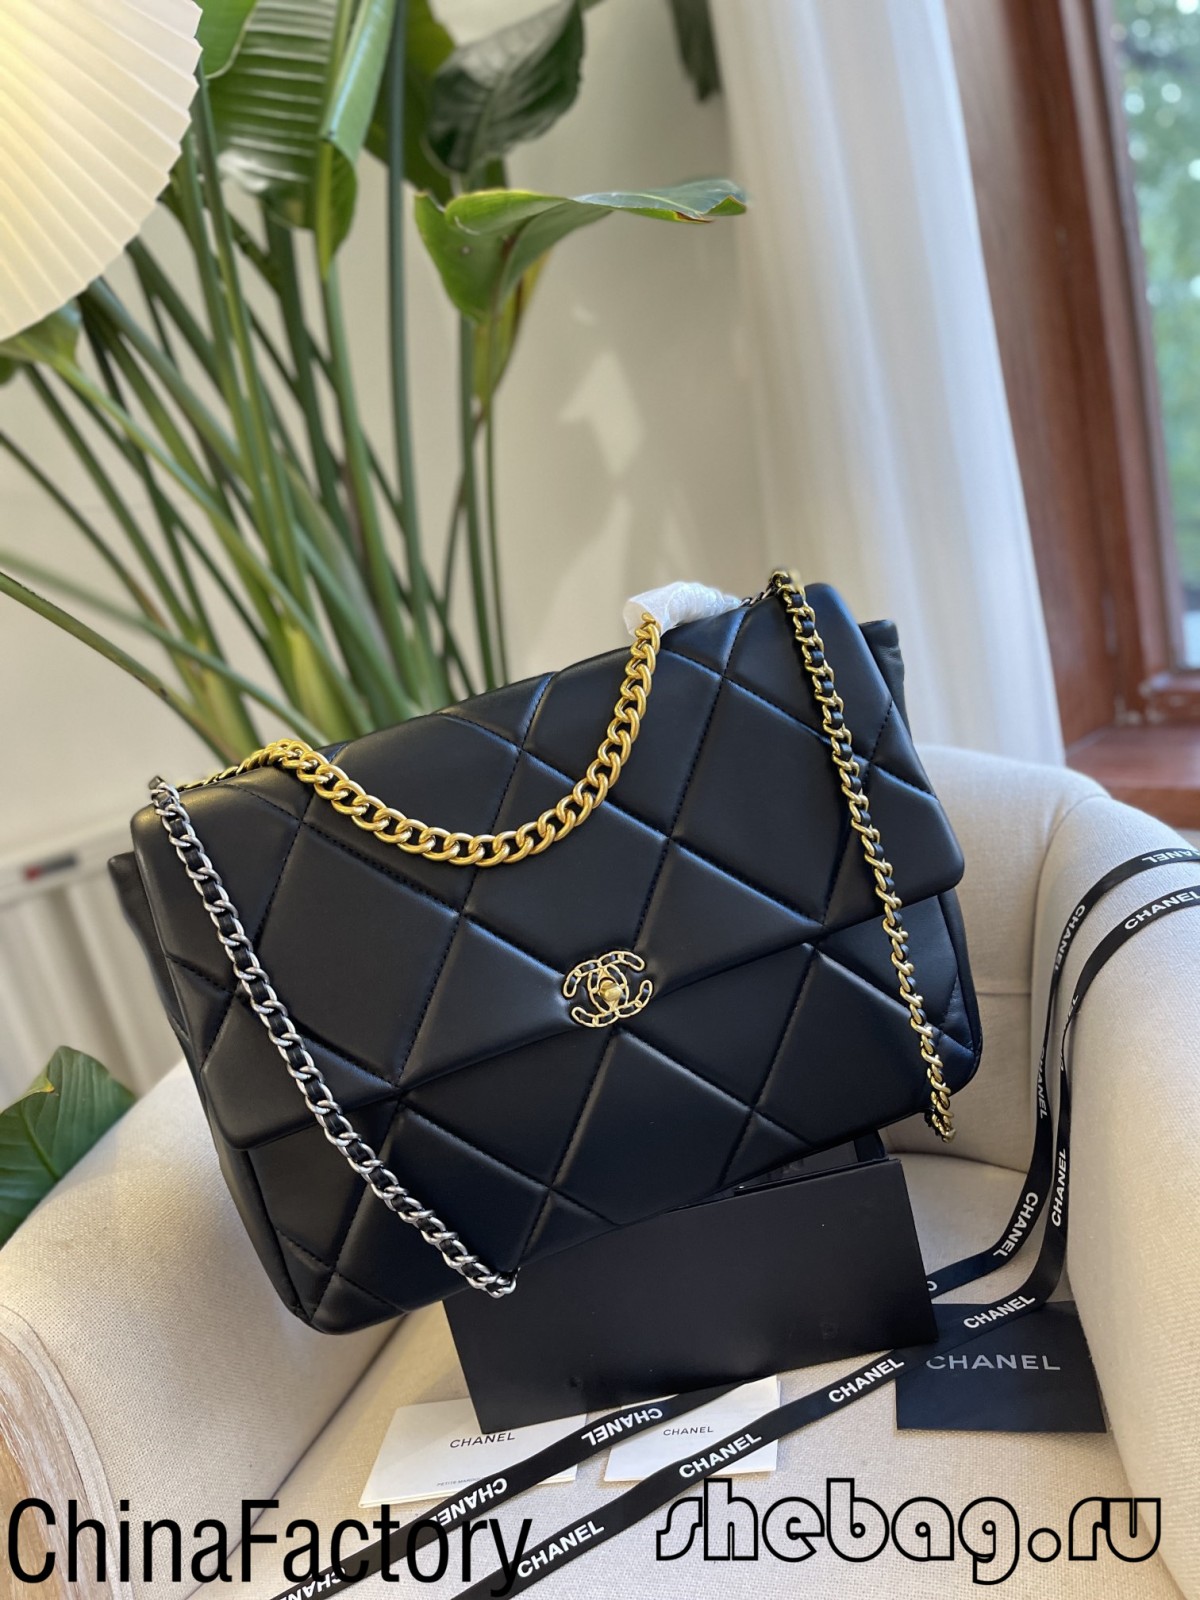 Top 21 most popular replica designer bags review (2022 updated)-Best Quality Fake Louis Vuitton Bag Online Store, Replica designer bag ru